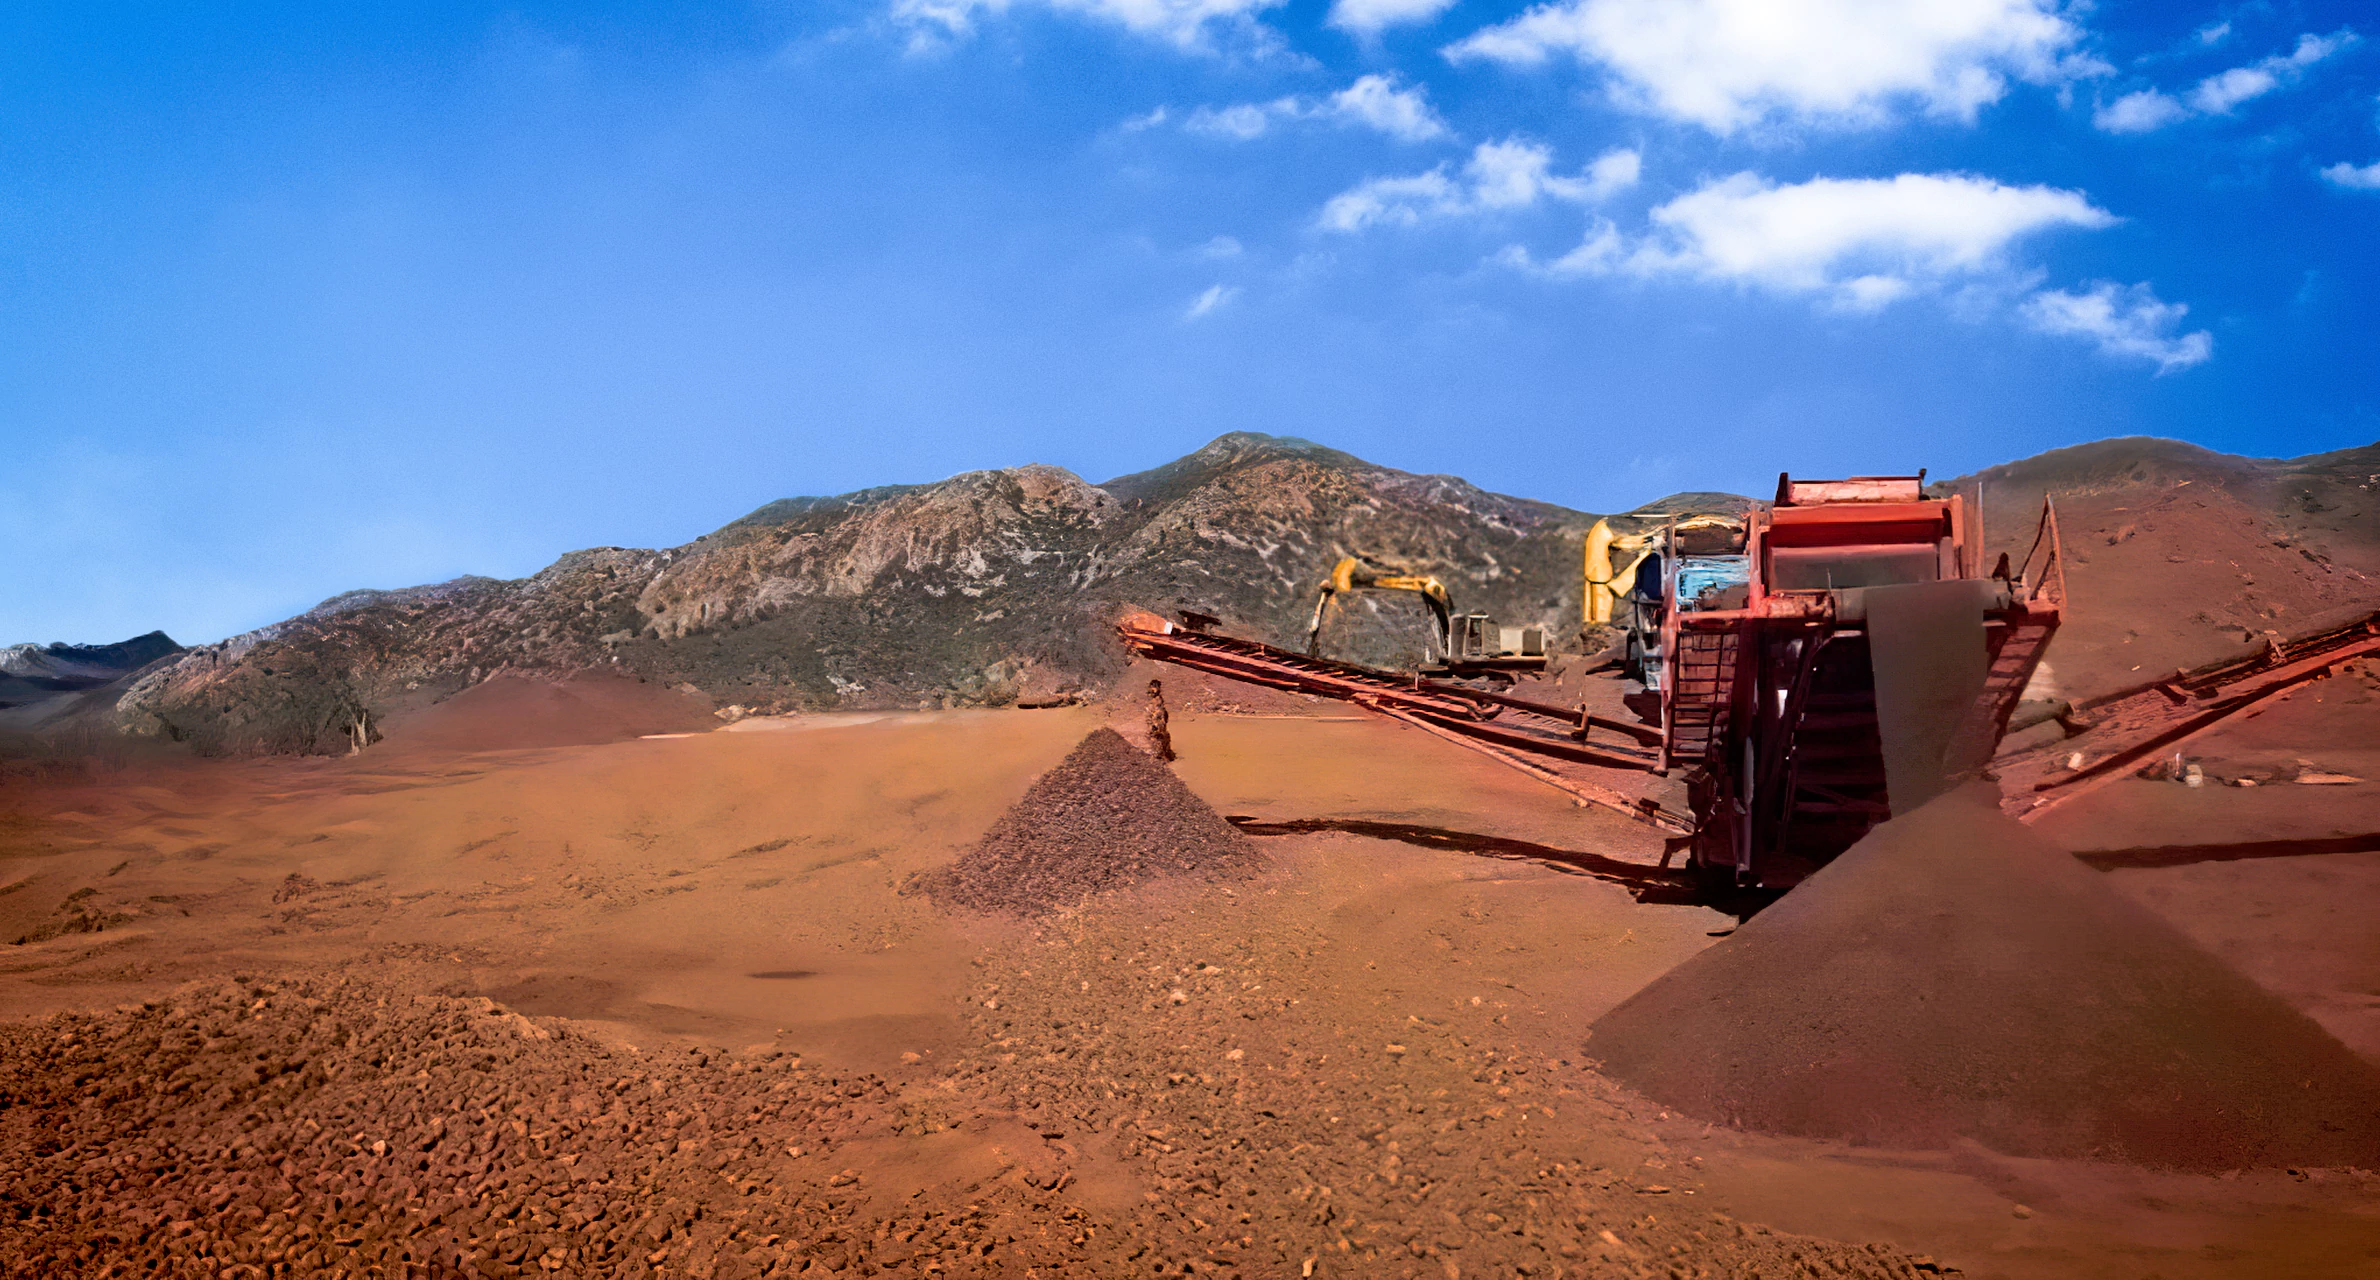 Iron-rich ore mining